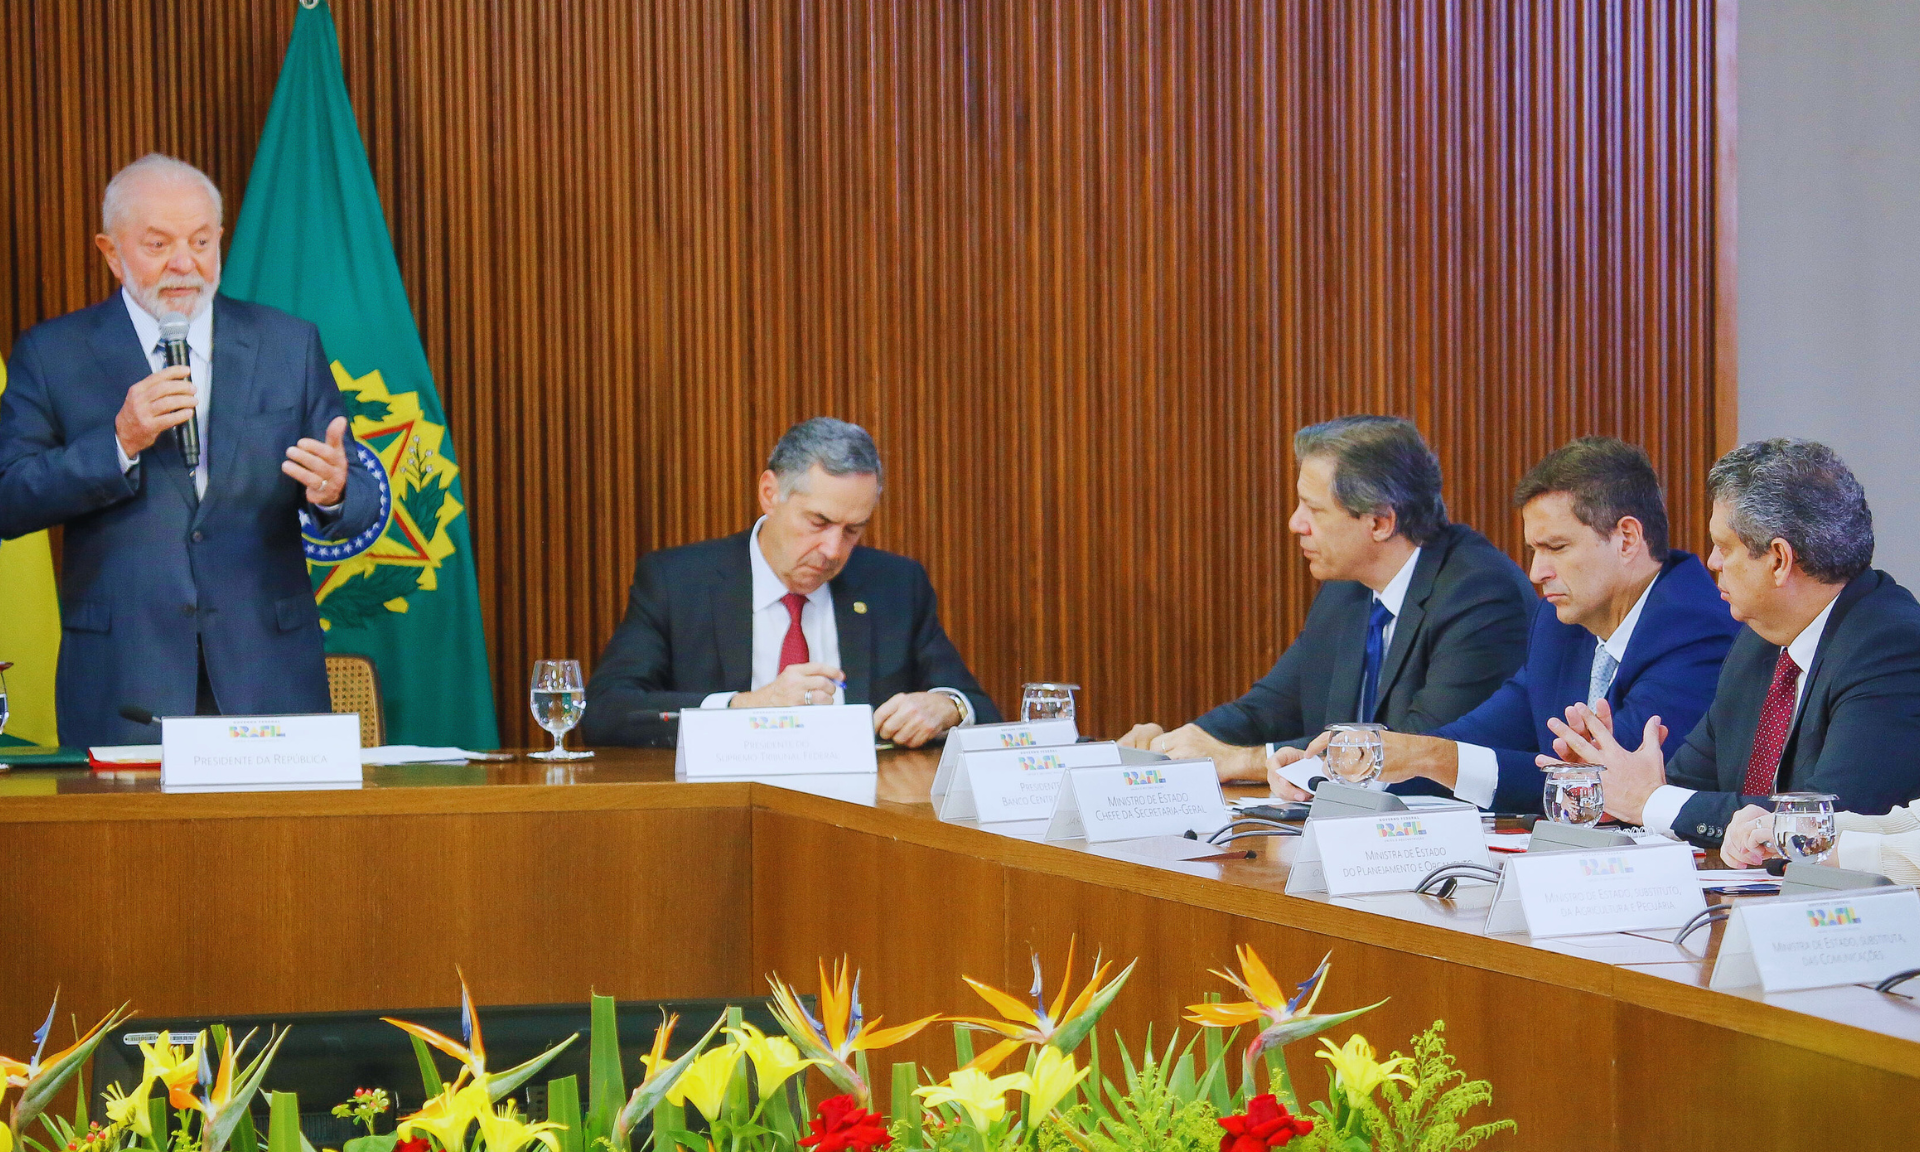 Ouvir a sociedade antes do encontro dos Chefes de Estado é proposta inovadora do governo brasileiro